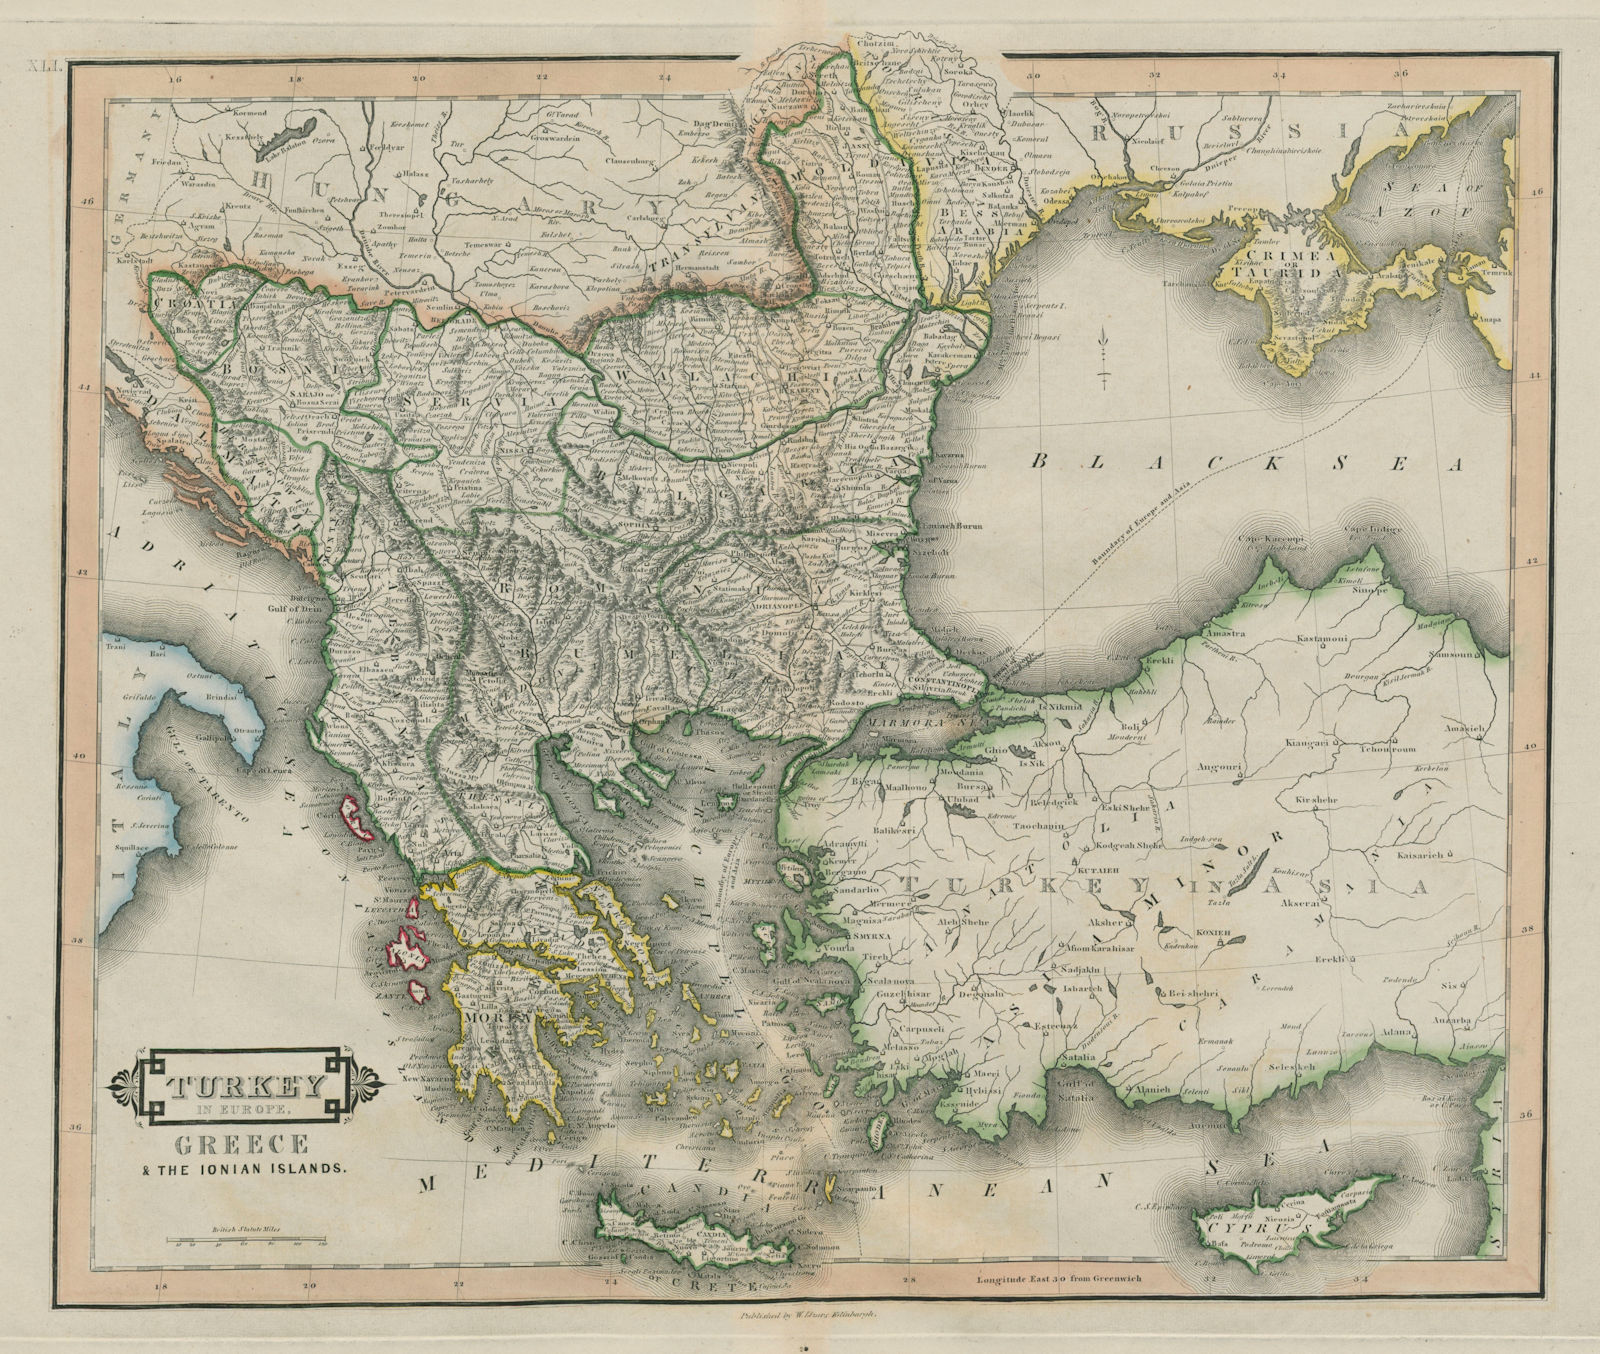 Associate Product Turkey in Europe, Greece & the Ionian Islands. Balkans & Aegean. LIZARS 1842 map